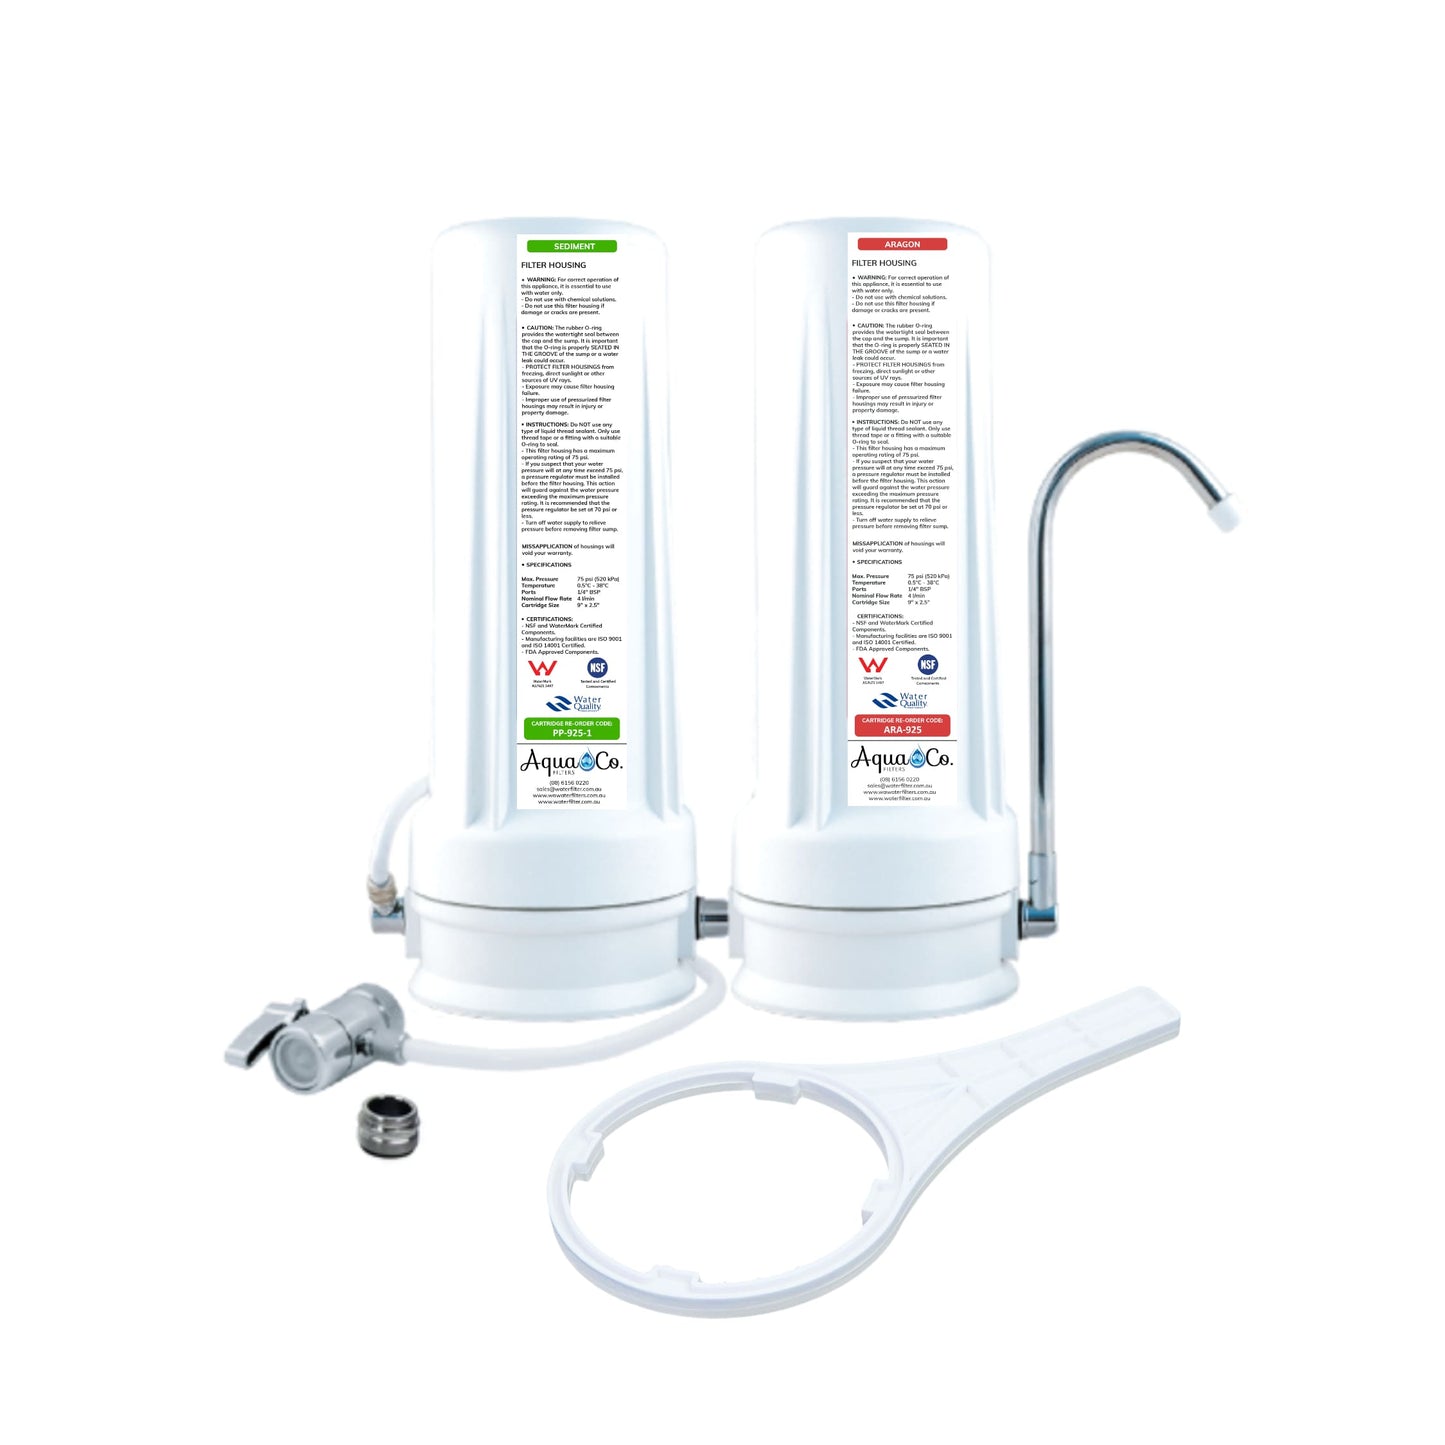 AquaCo CTOP-925SA Countertop Water Filter - Reduces Chlorine, Taste, Odours, Parasites, Viruses, Bacteria, and Lead.